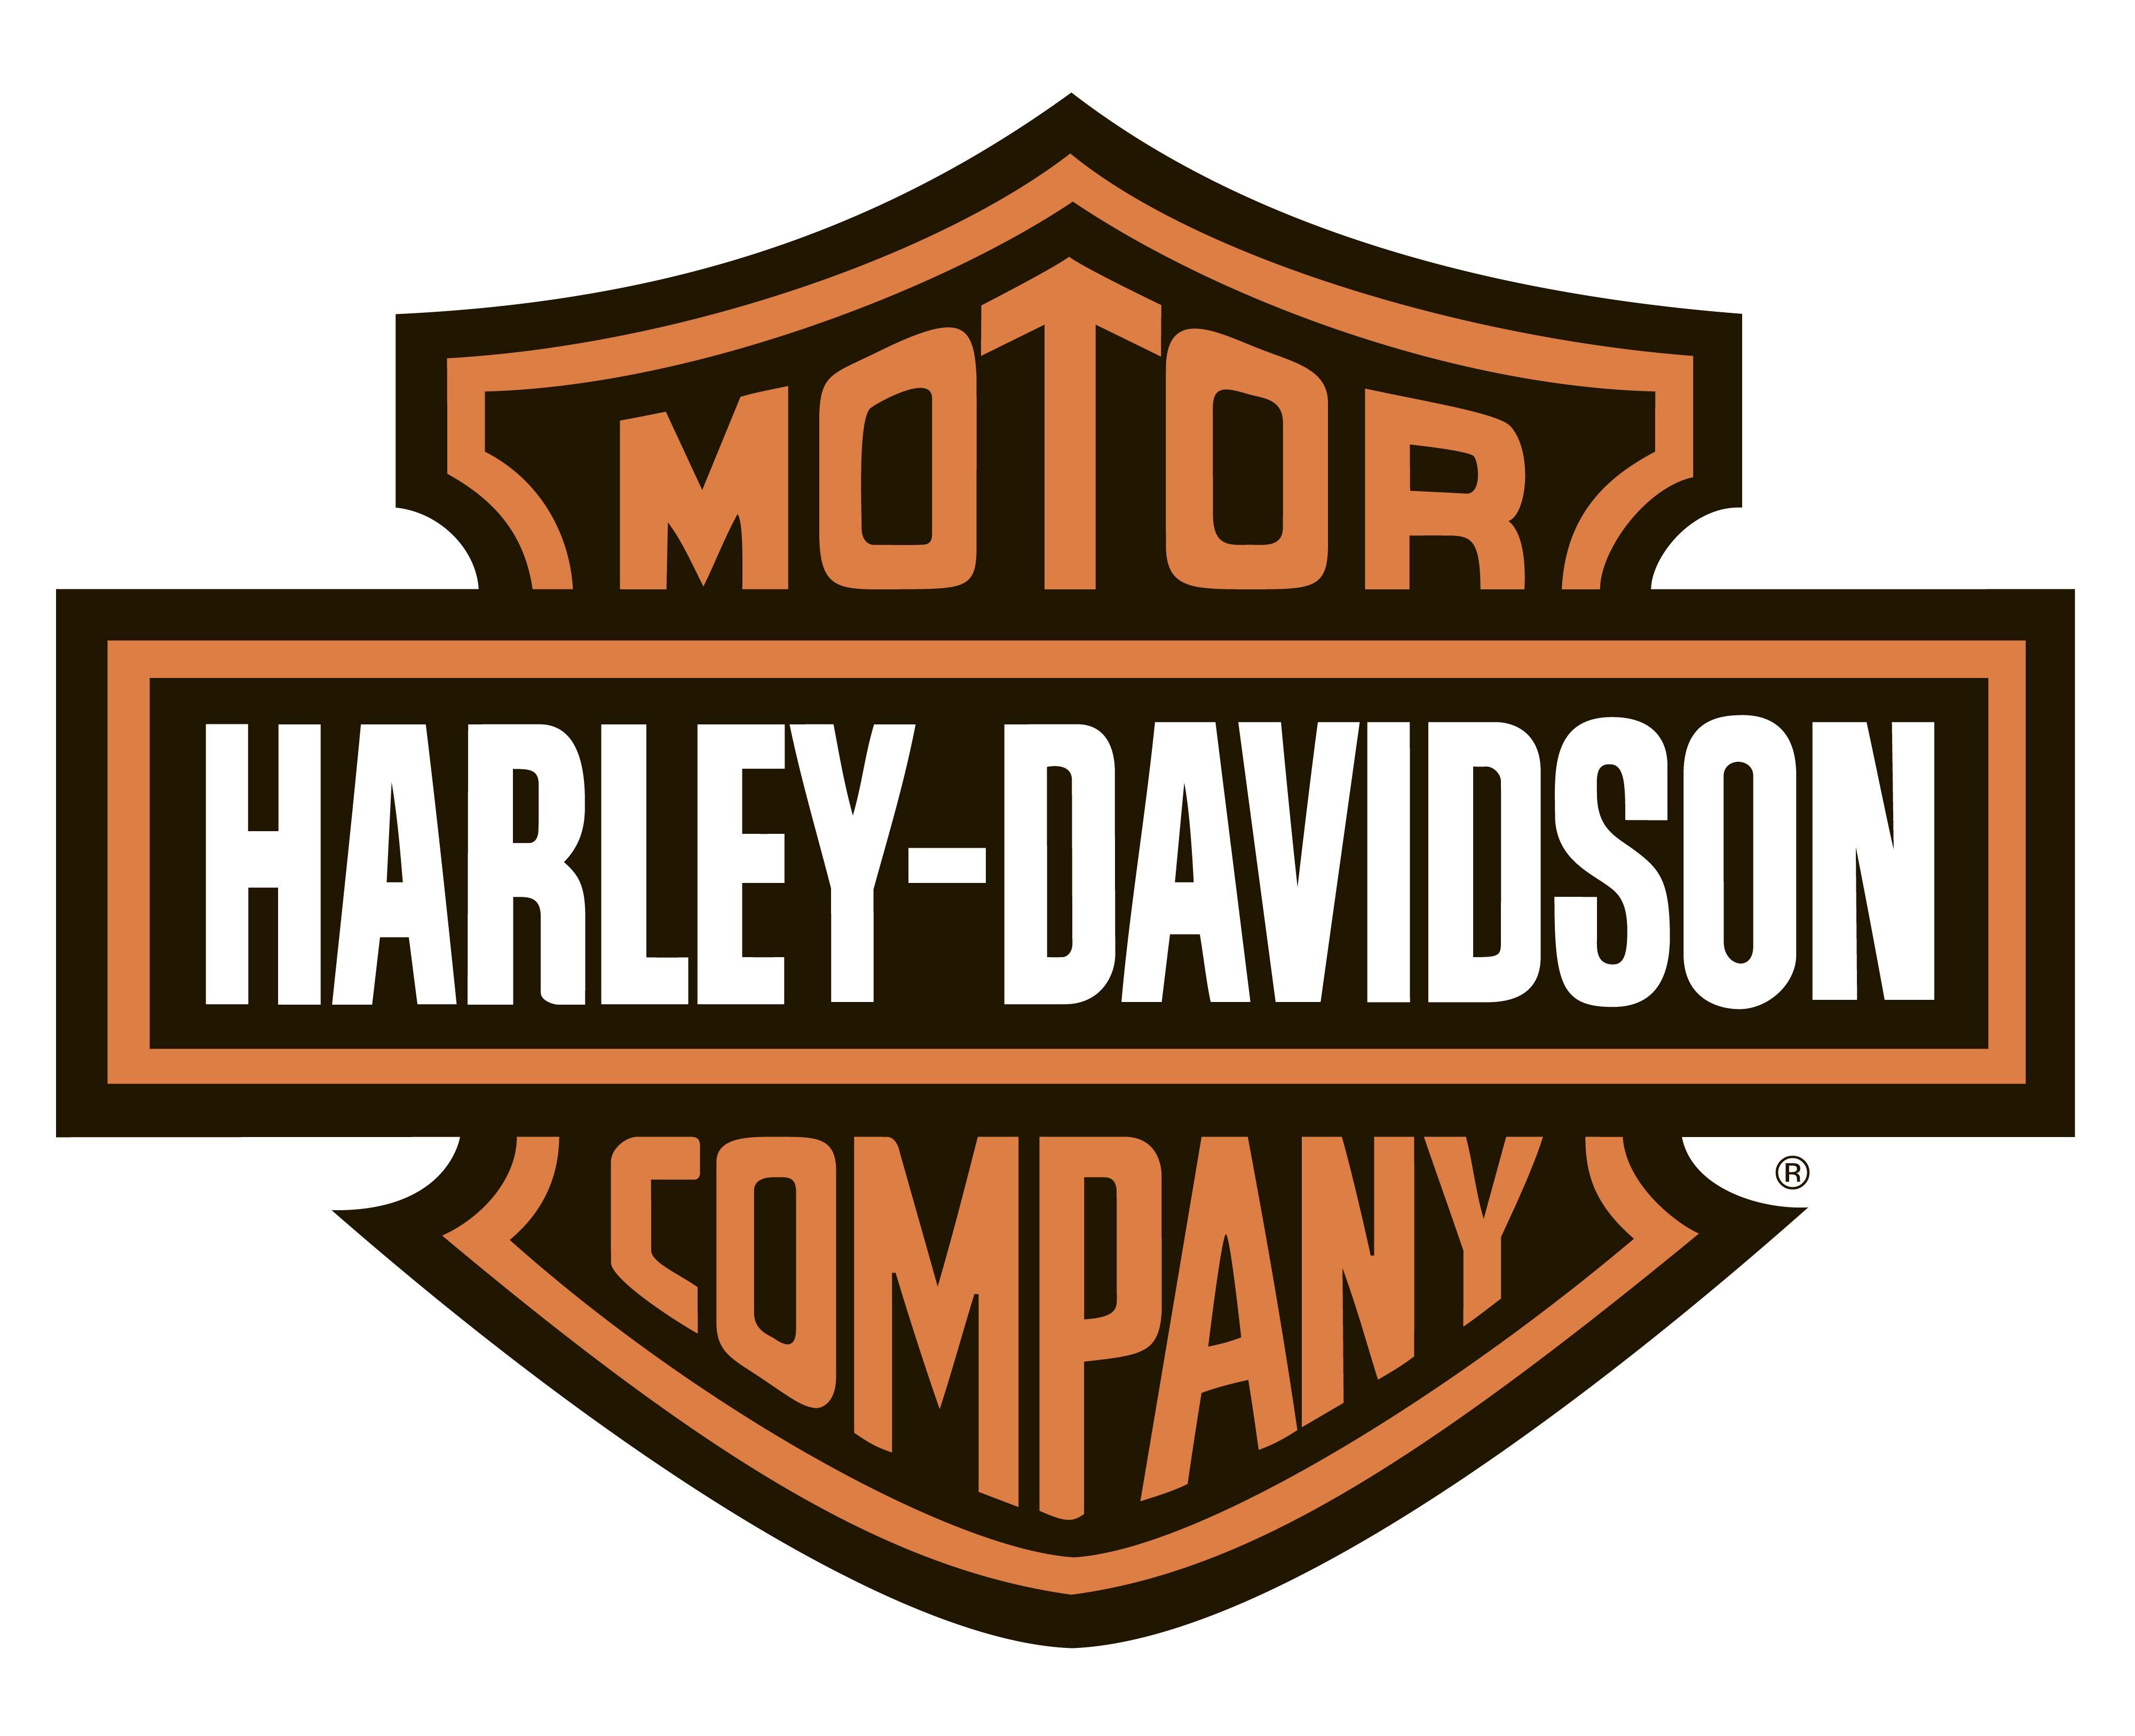 Davidson Logo - Harley Davidson Motorcycle Logo History And Meaning, Bike Emblem